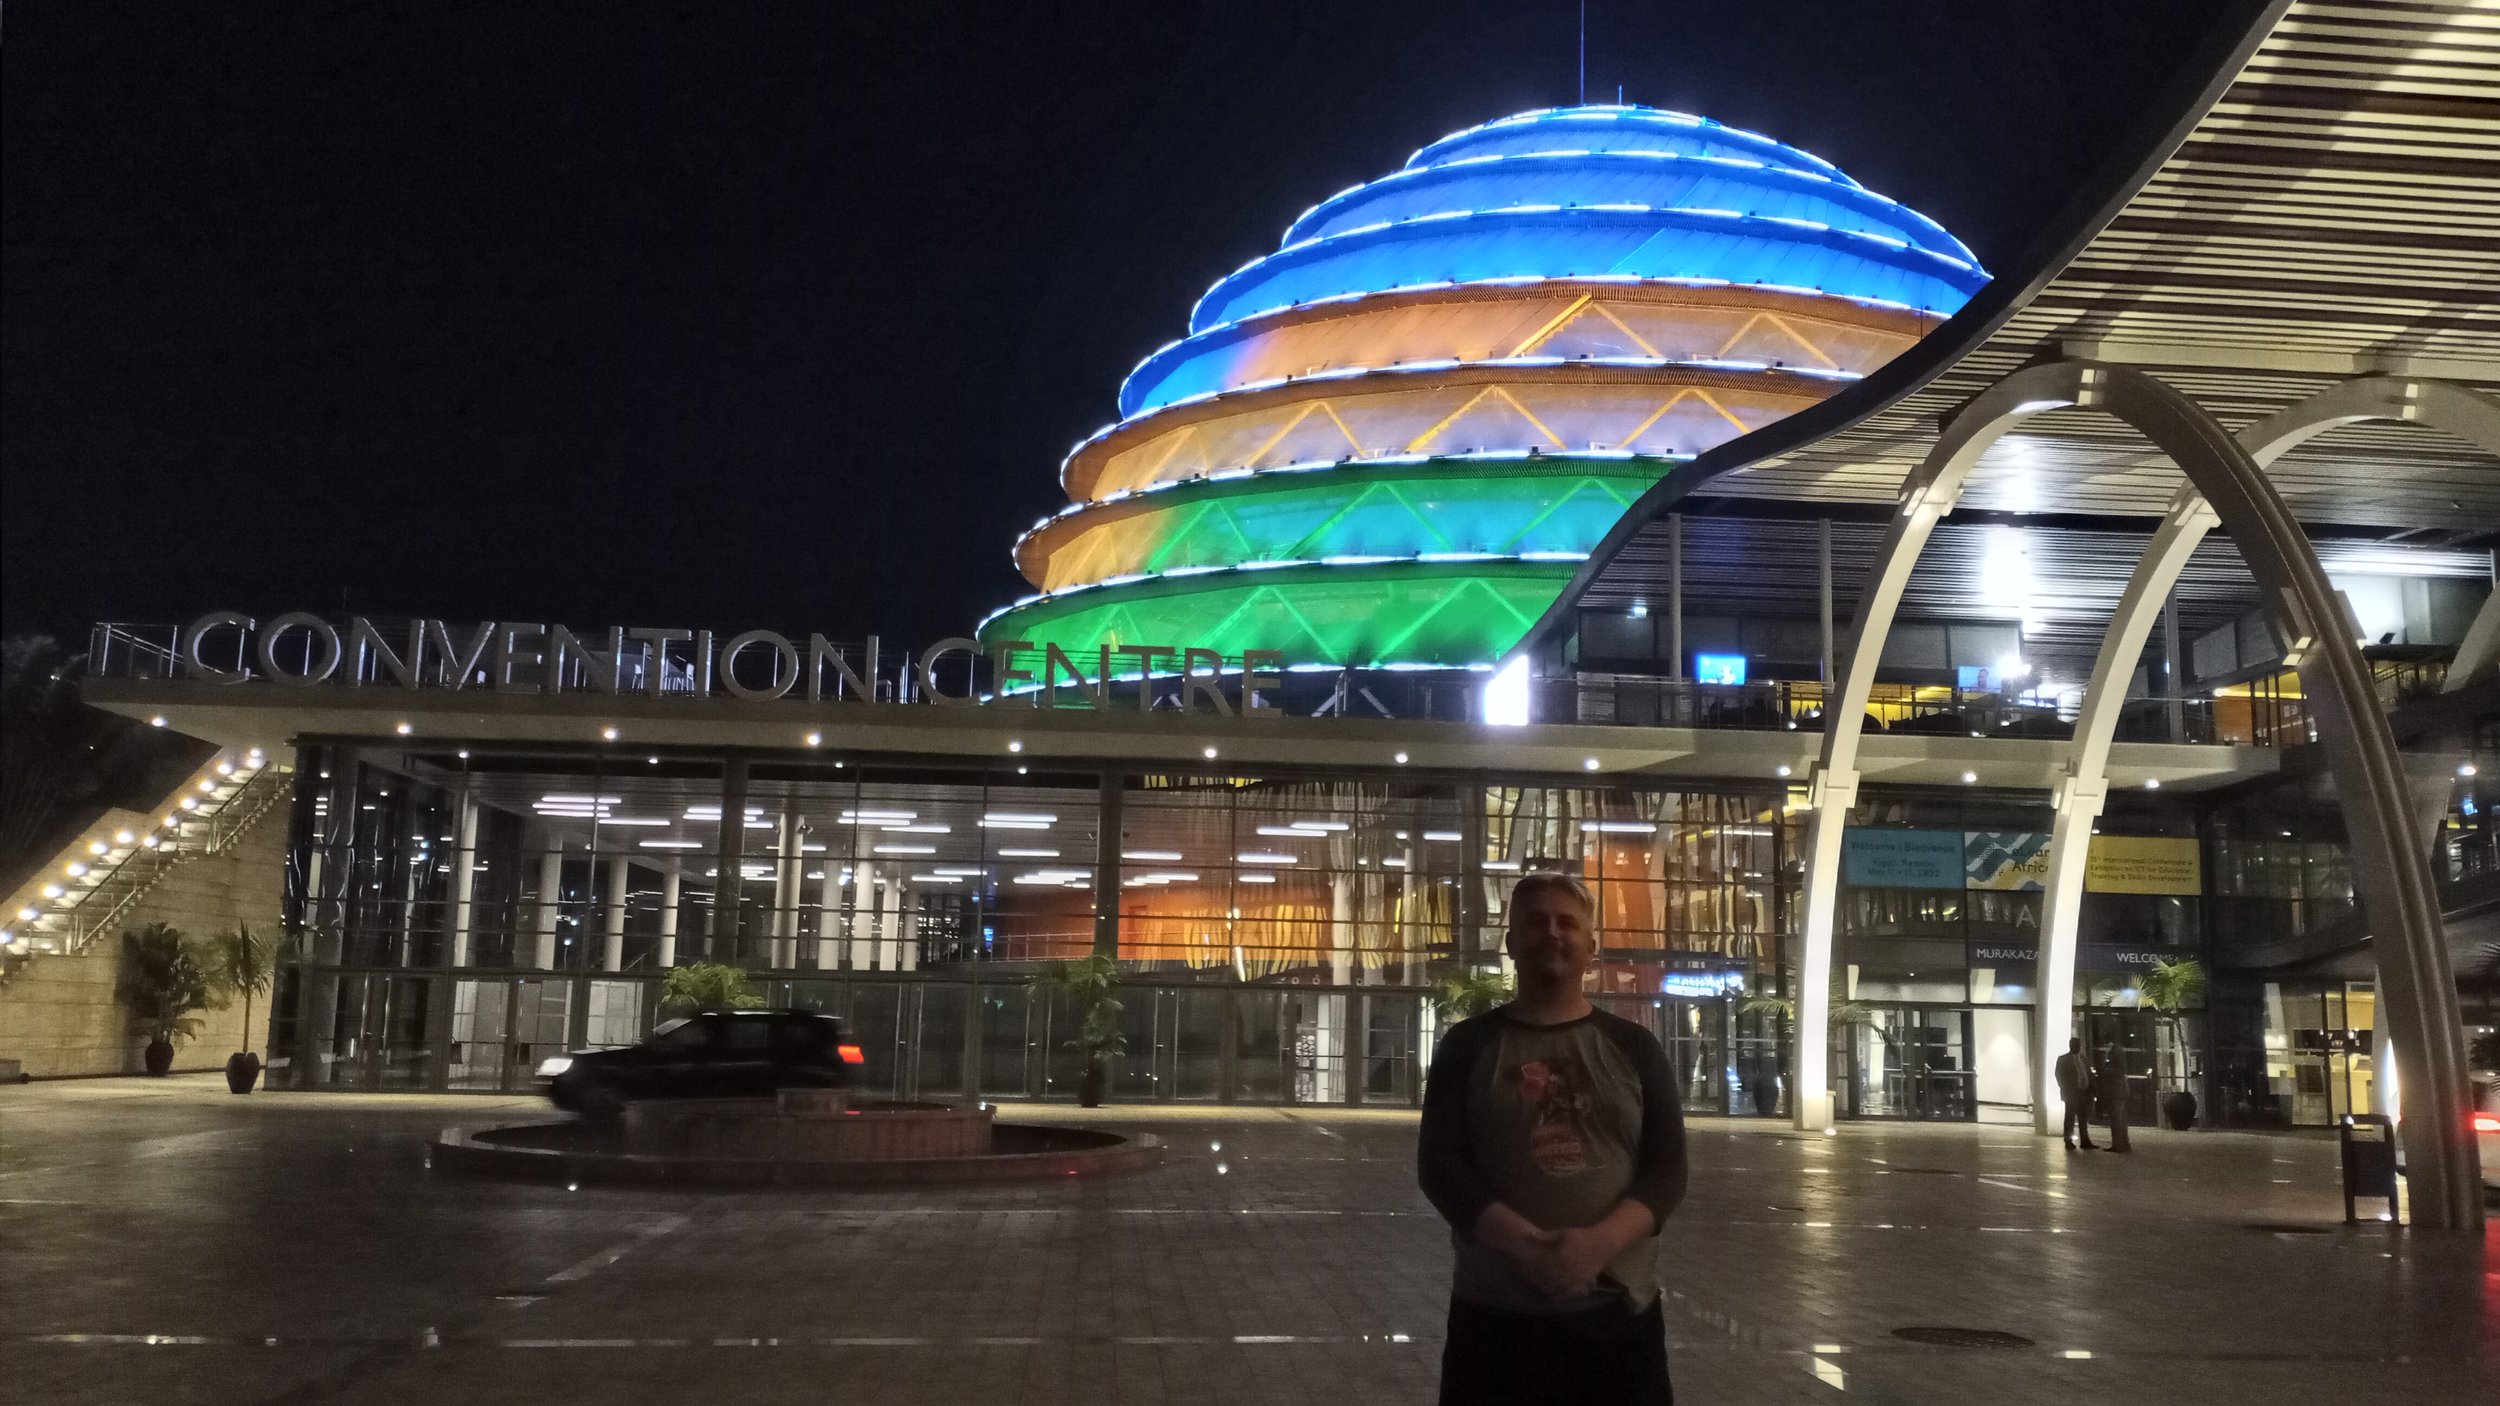 Kigali Convention Center